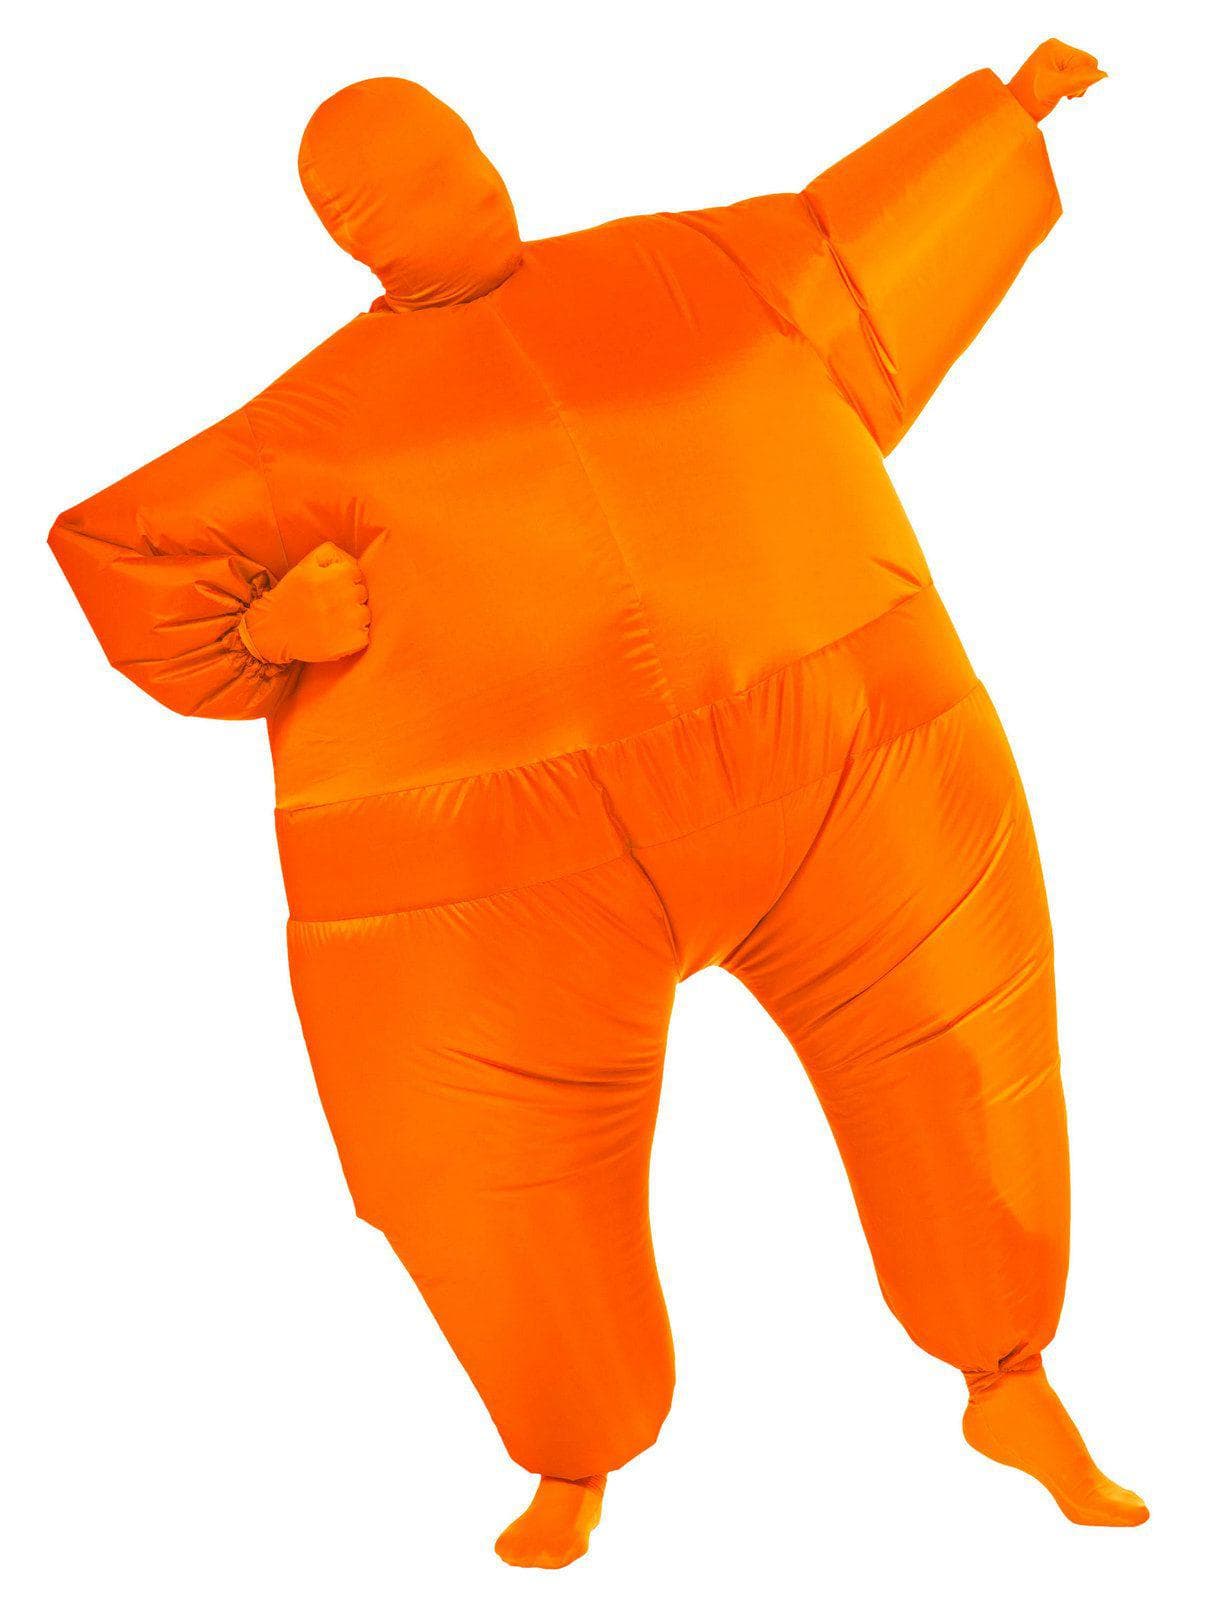 Adult Orange Inflatable Jumpsuit - costumes.com